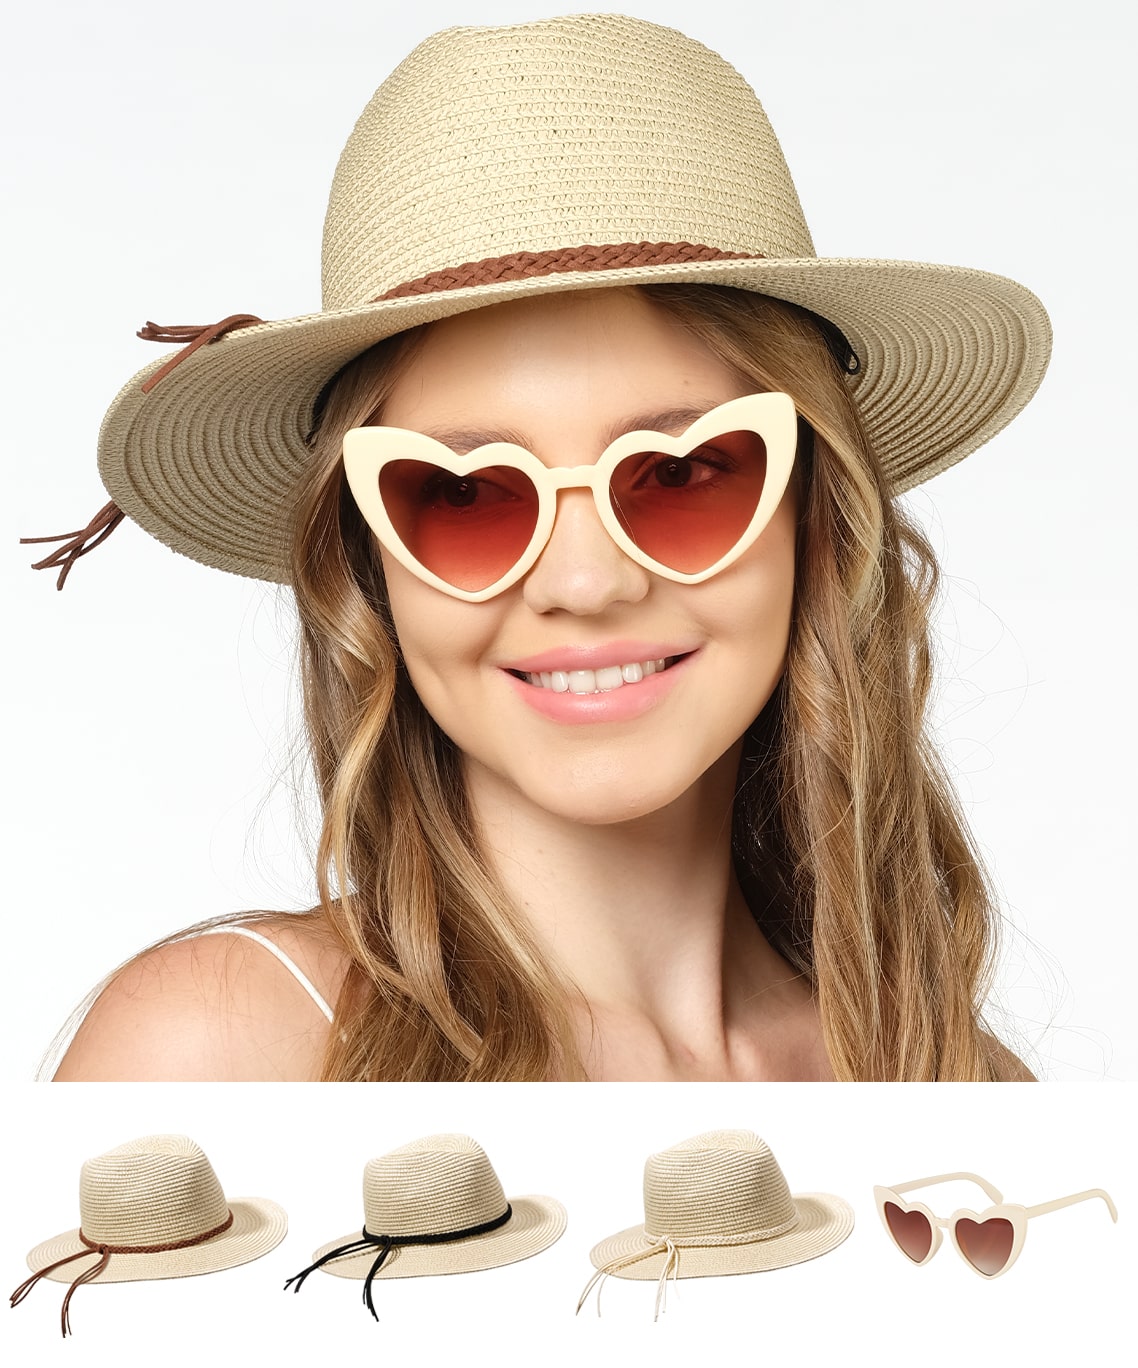 women's sombrero de playa para mujer wicker fedora framer stylist adjustable cappello verabella  -ivory, cream, khaki, beige, sand, tan, buff, ecru,camel, black, brown, chocolate brown